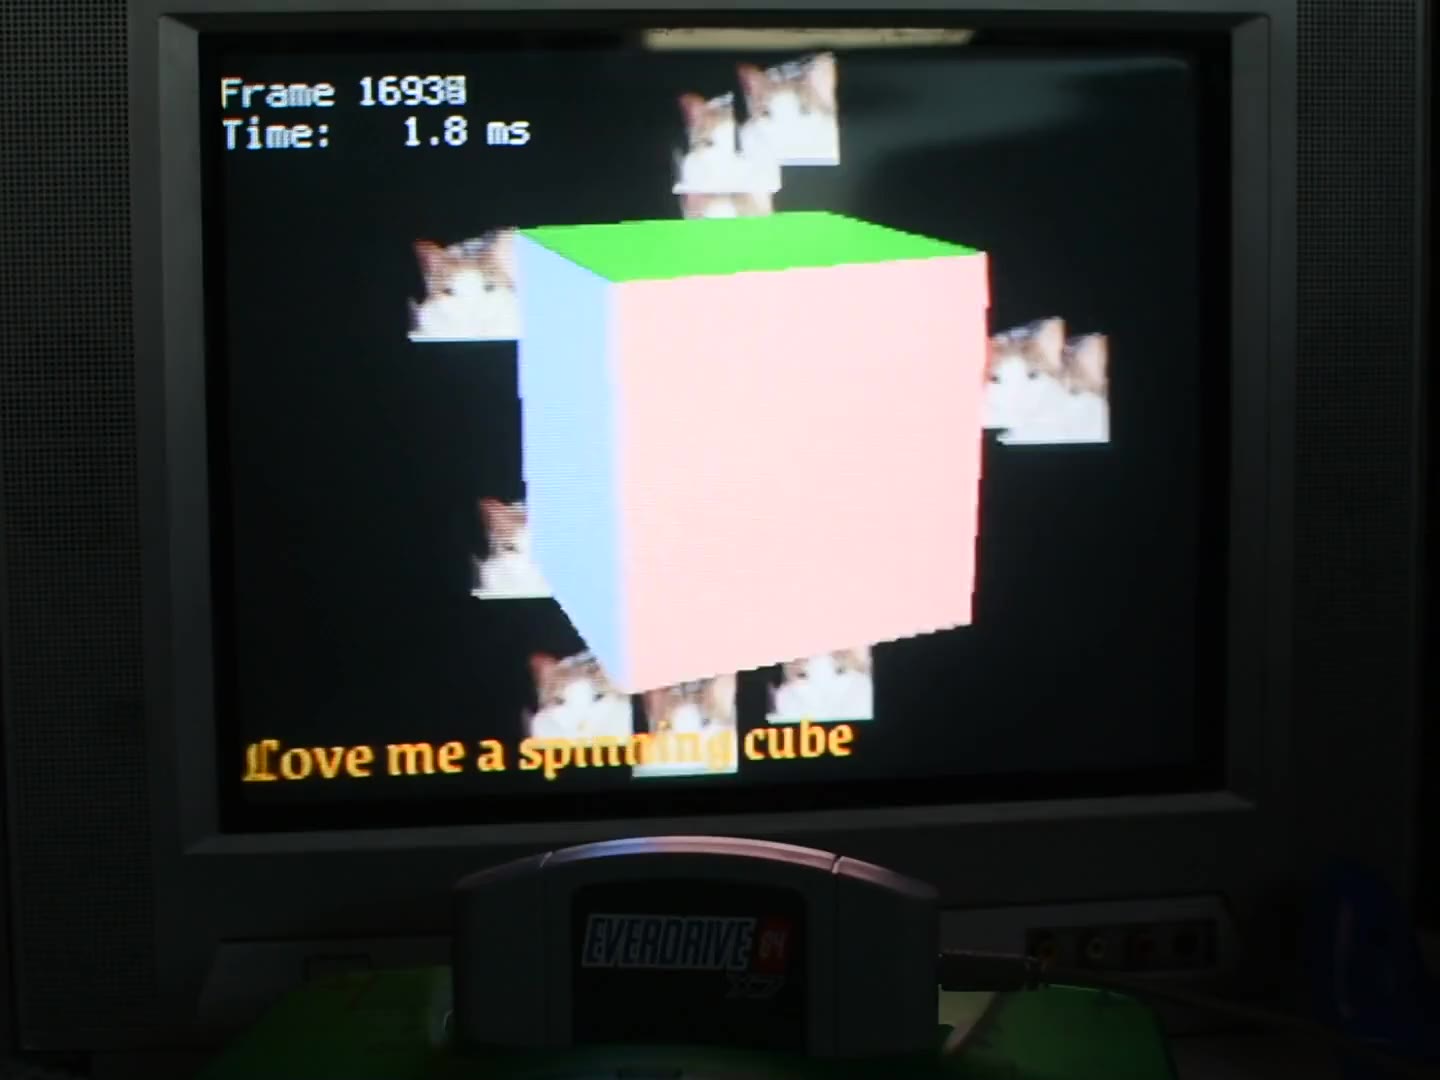 Nintendo 64 Part 15: A Spinning Cube